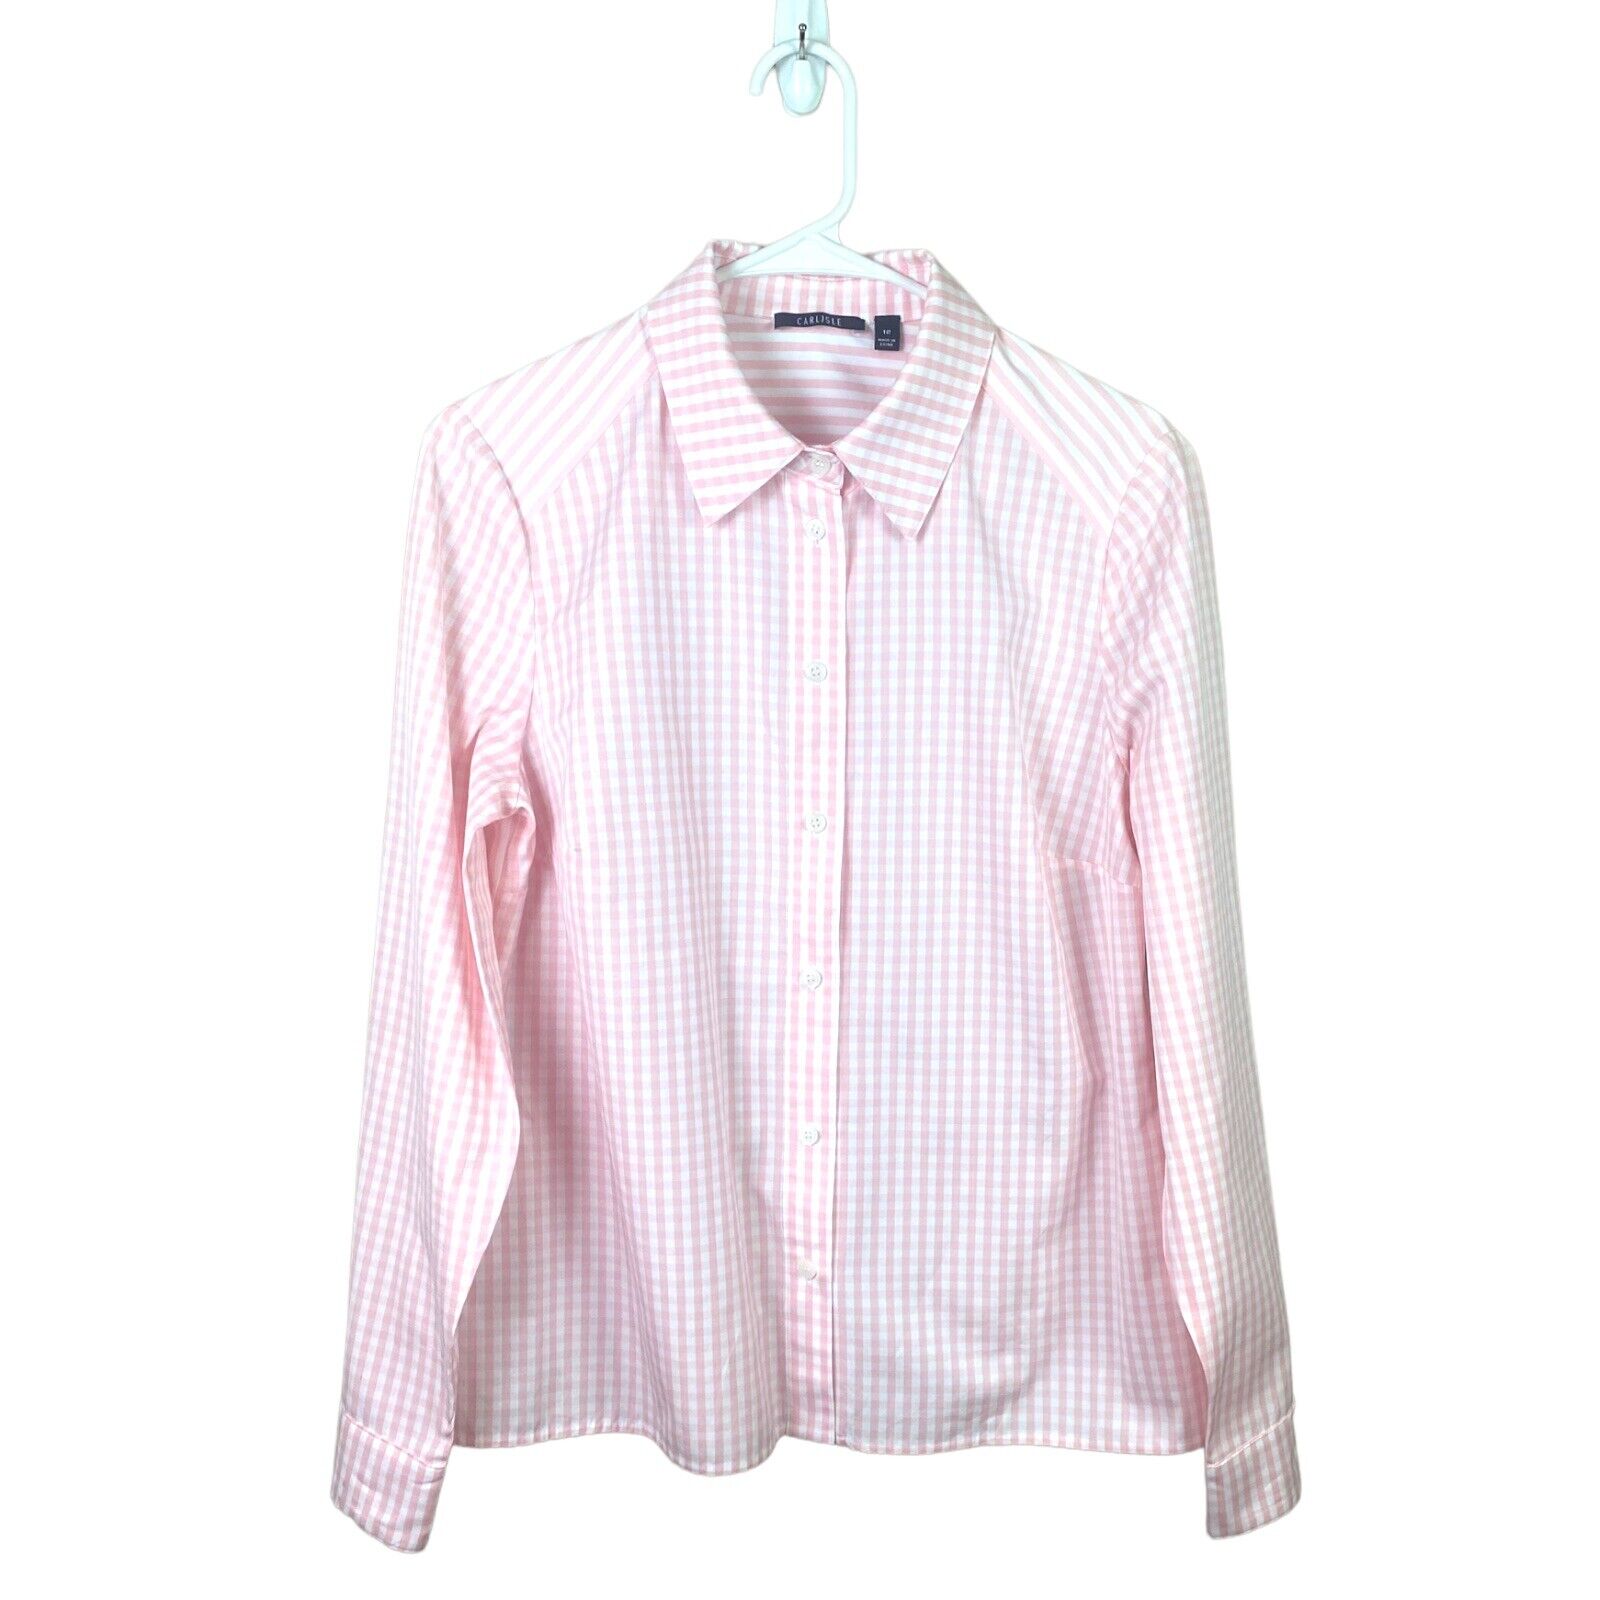 Carlisle Women’s Pink White Gingham Striped Blouse Button Down Shirt Size 12